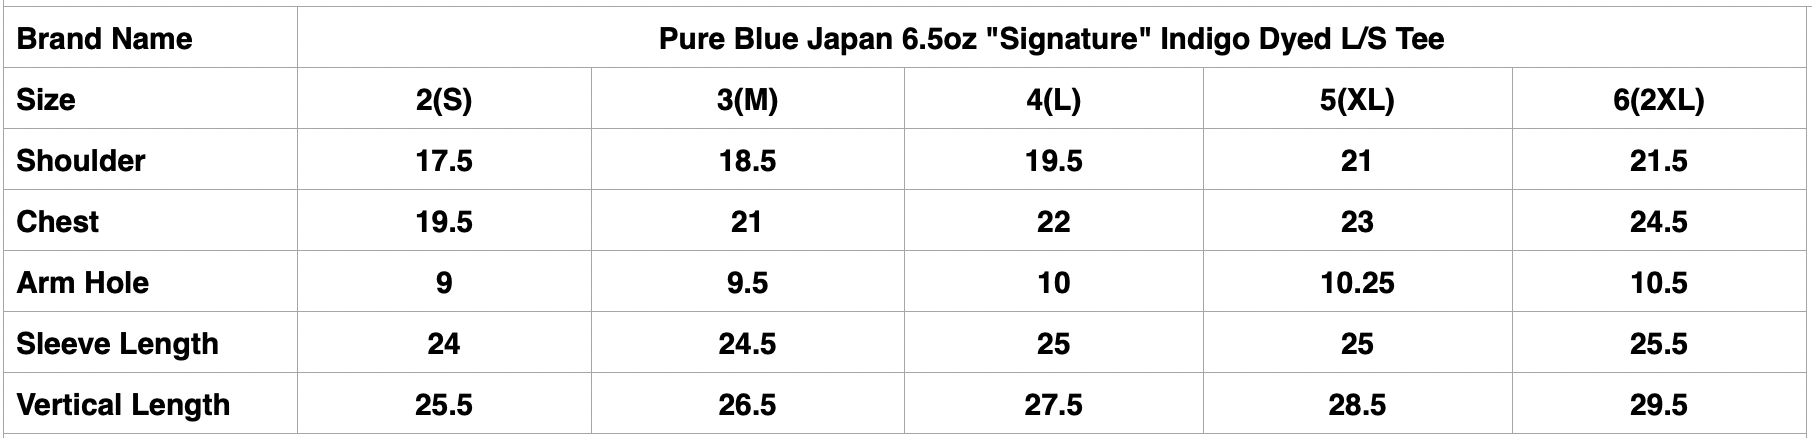 Pure Blue Japan 6.5oz "Signature" Indigo Dyed L/S Tee (Icy Indigo)